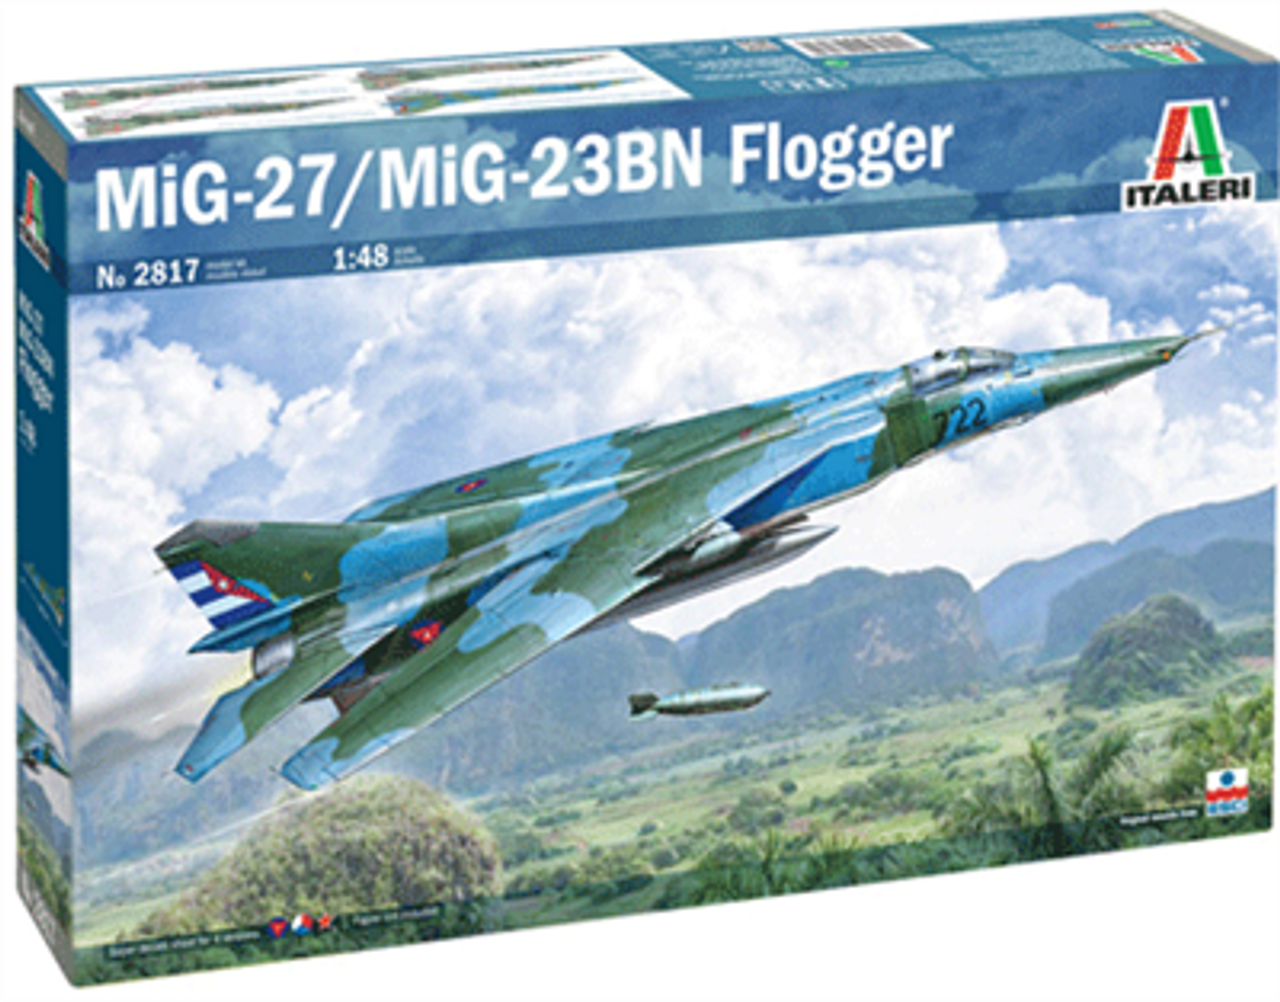 Italeri 2817 1/48 MiG-27 / MiG-23BN Flogger Plastic Model Kit